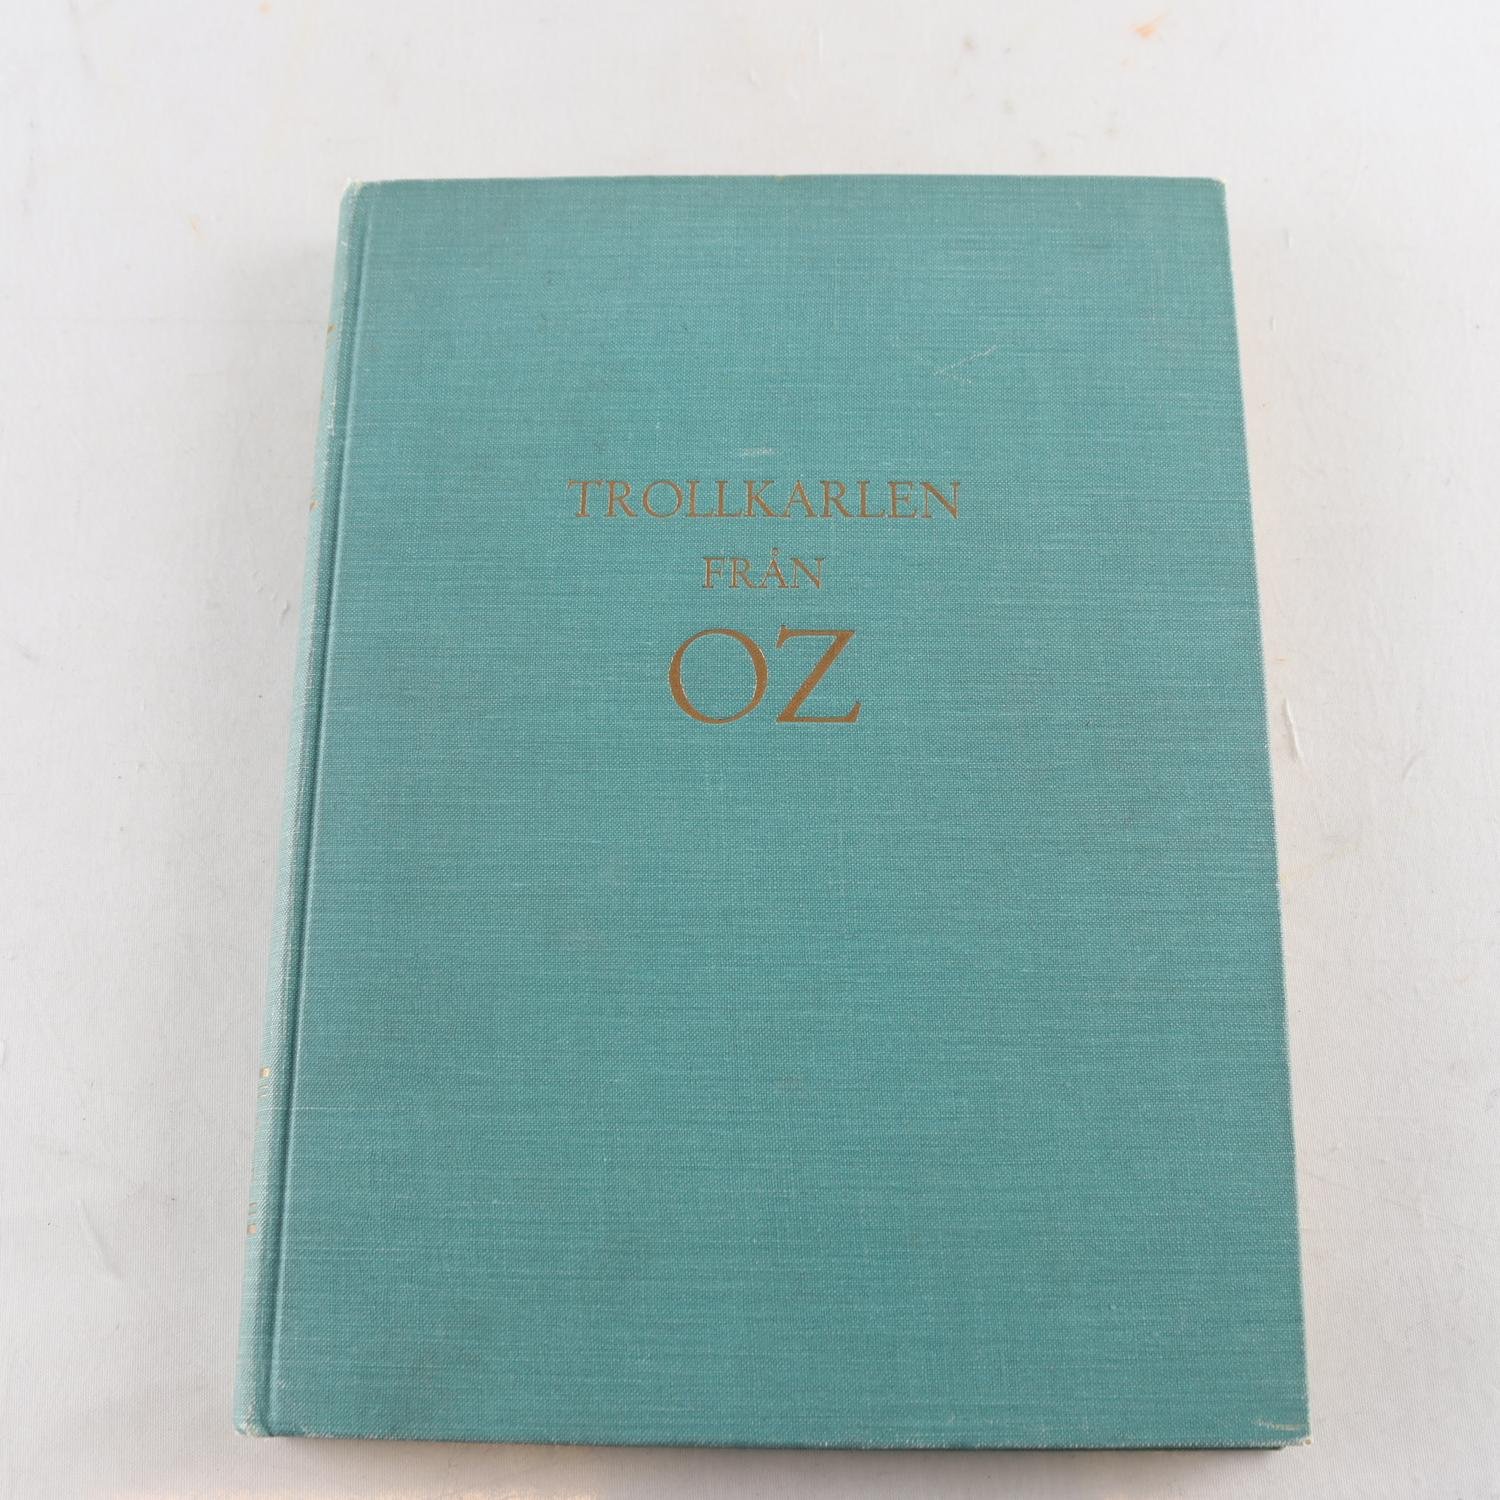 Trollkarlen från OZ, L. Frank Baum (1940)